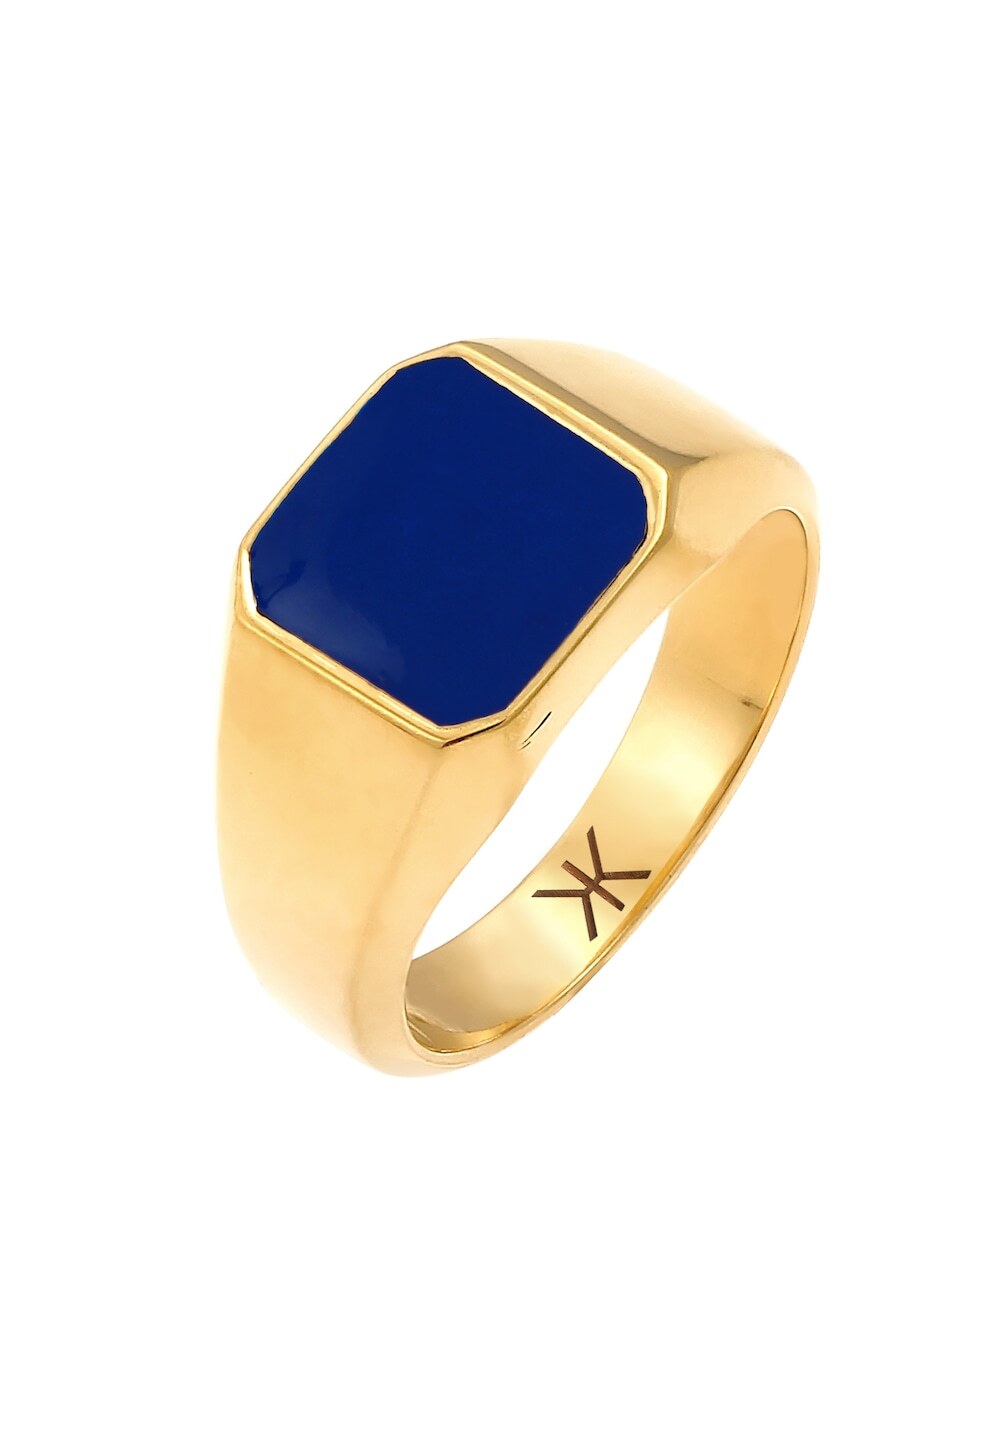 KUZZOI KUZZOI KUZZOI Ring Heren zegelring blauw basis massief met email in 925 sterlingzilver verguld Ringen